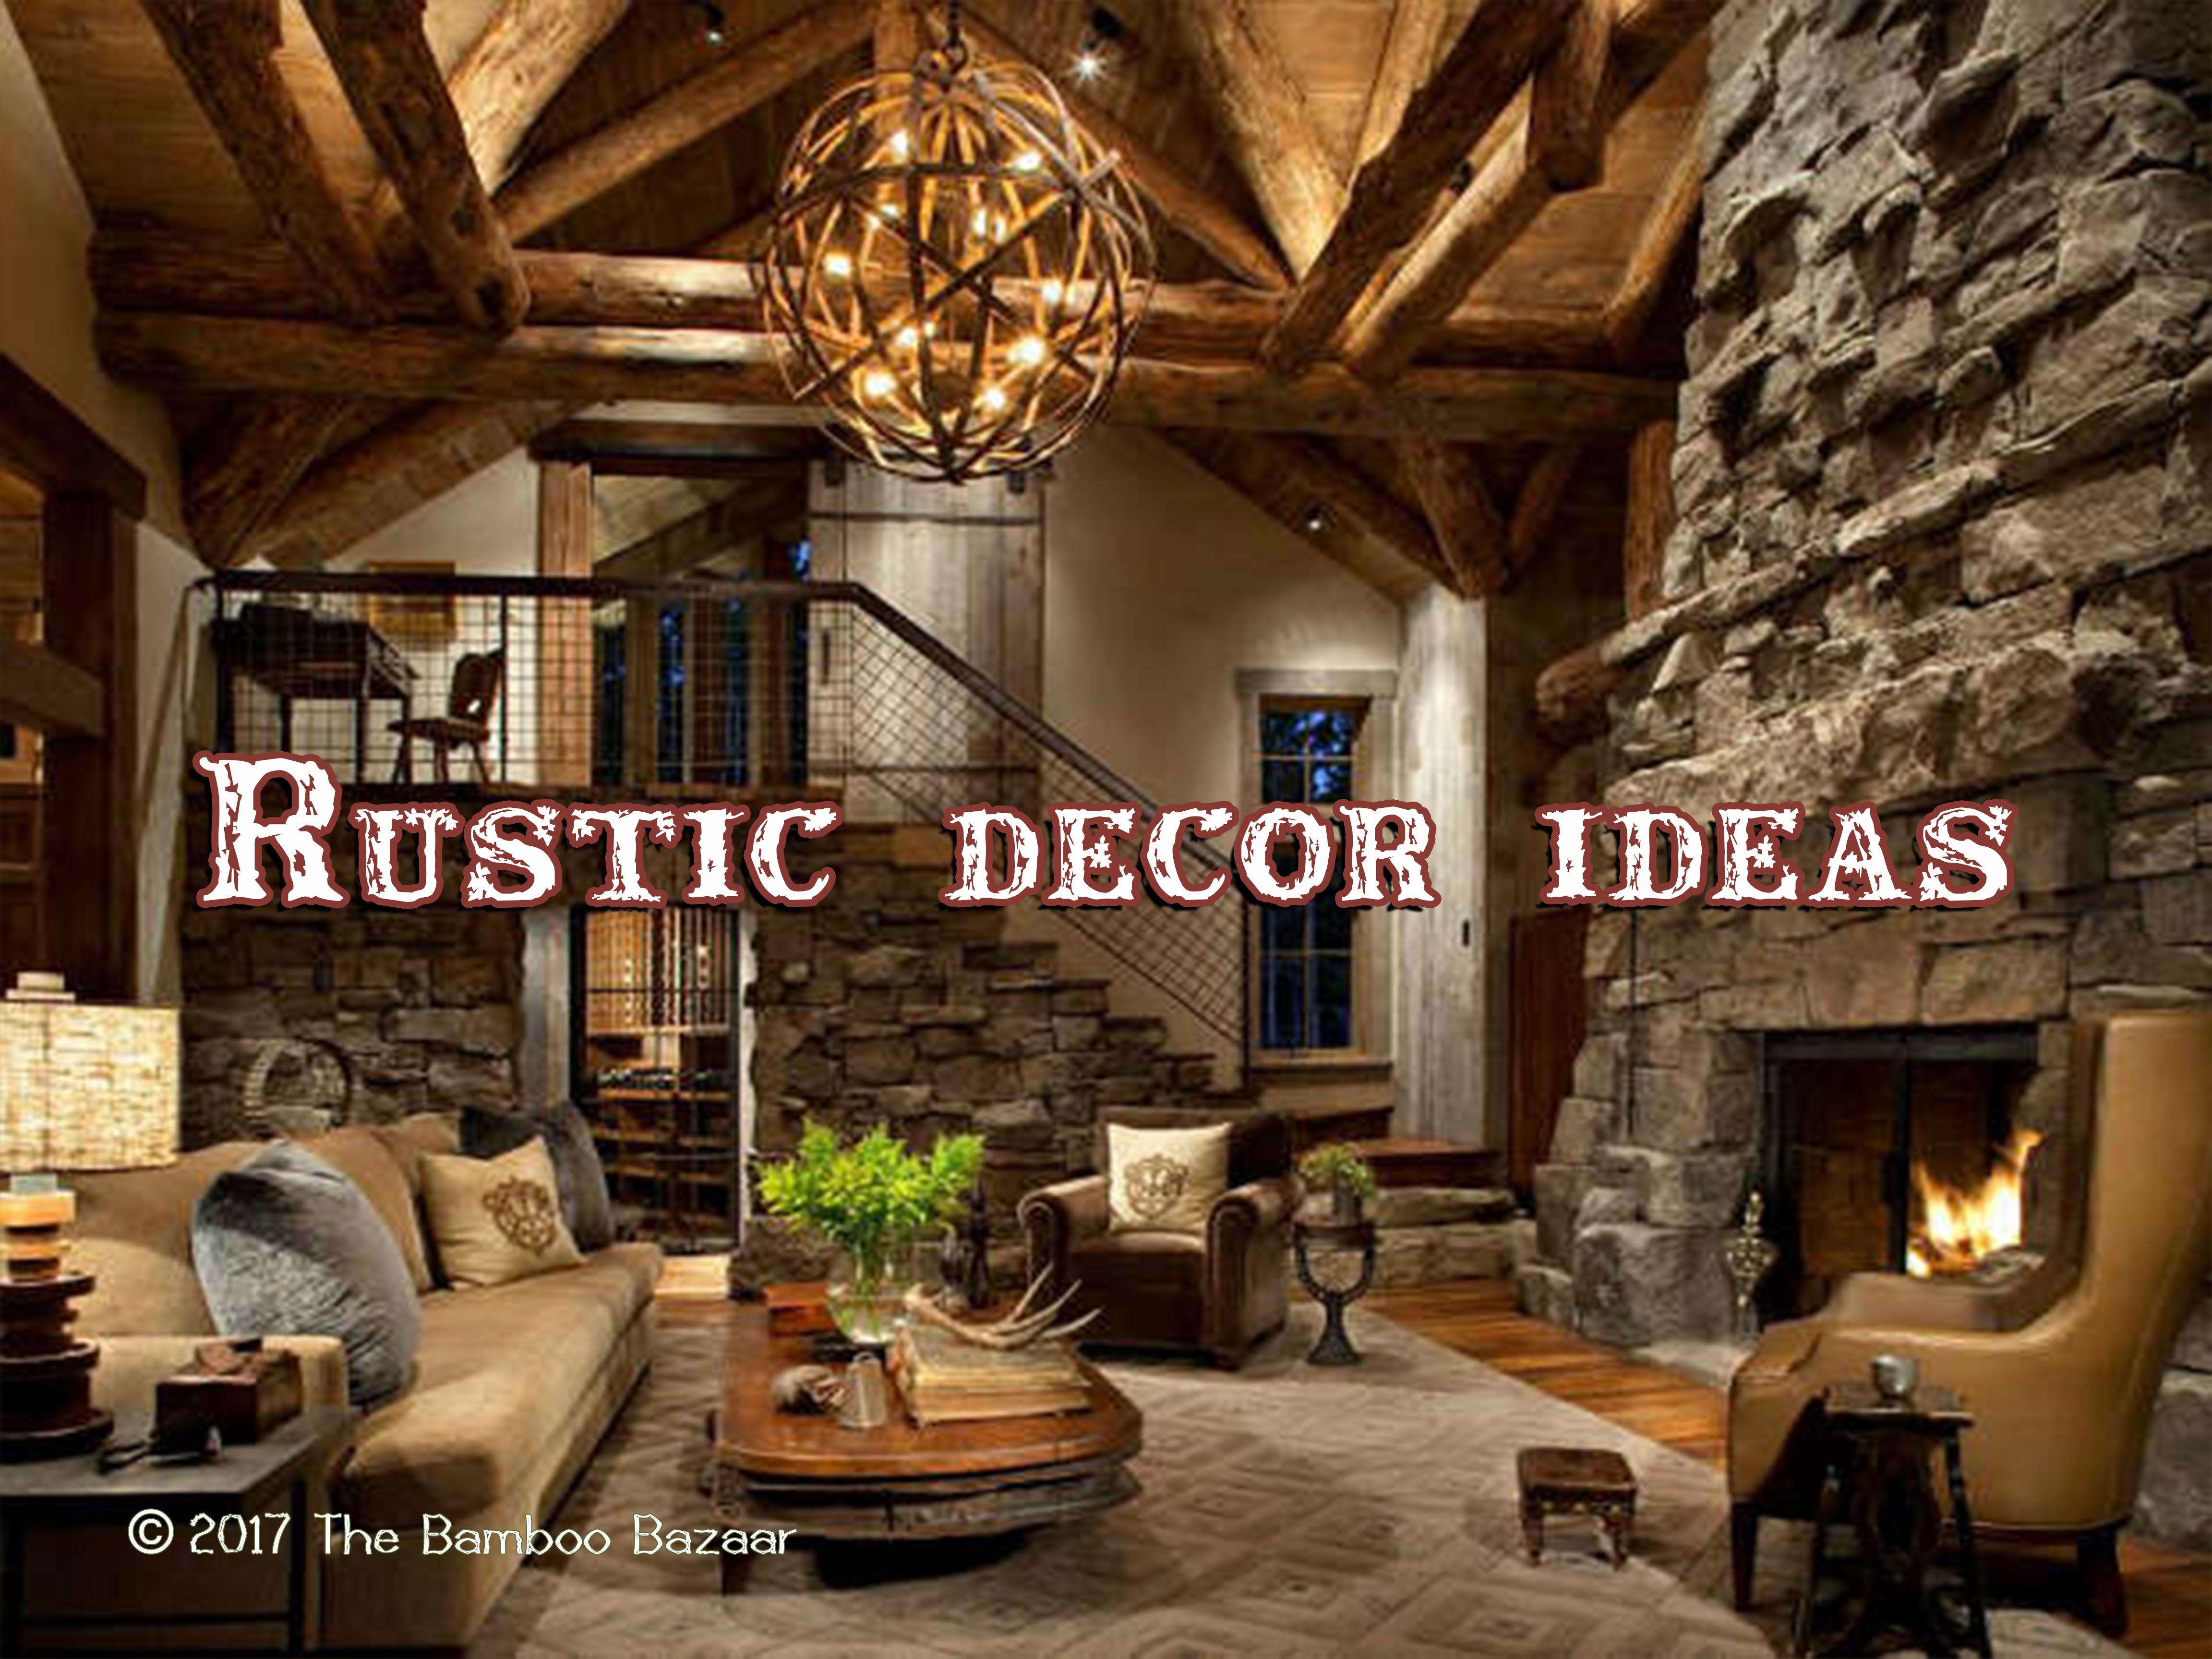 Rustic décor ideas